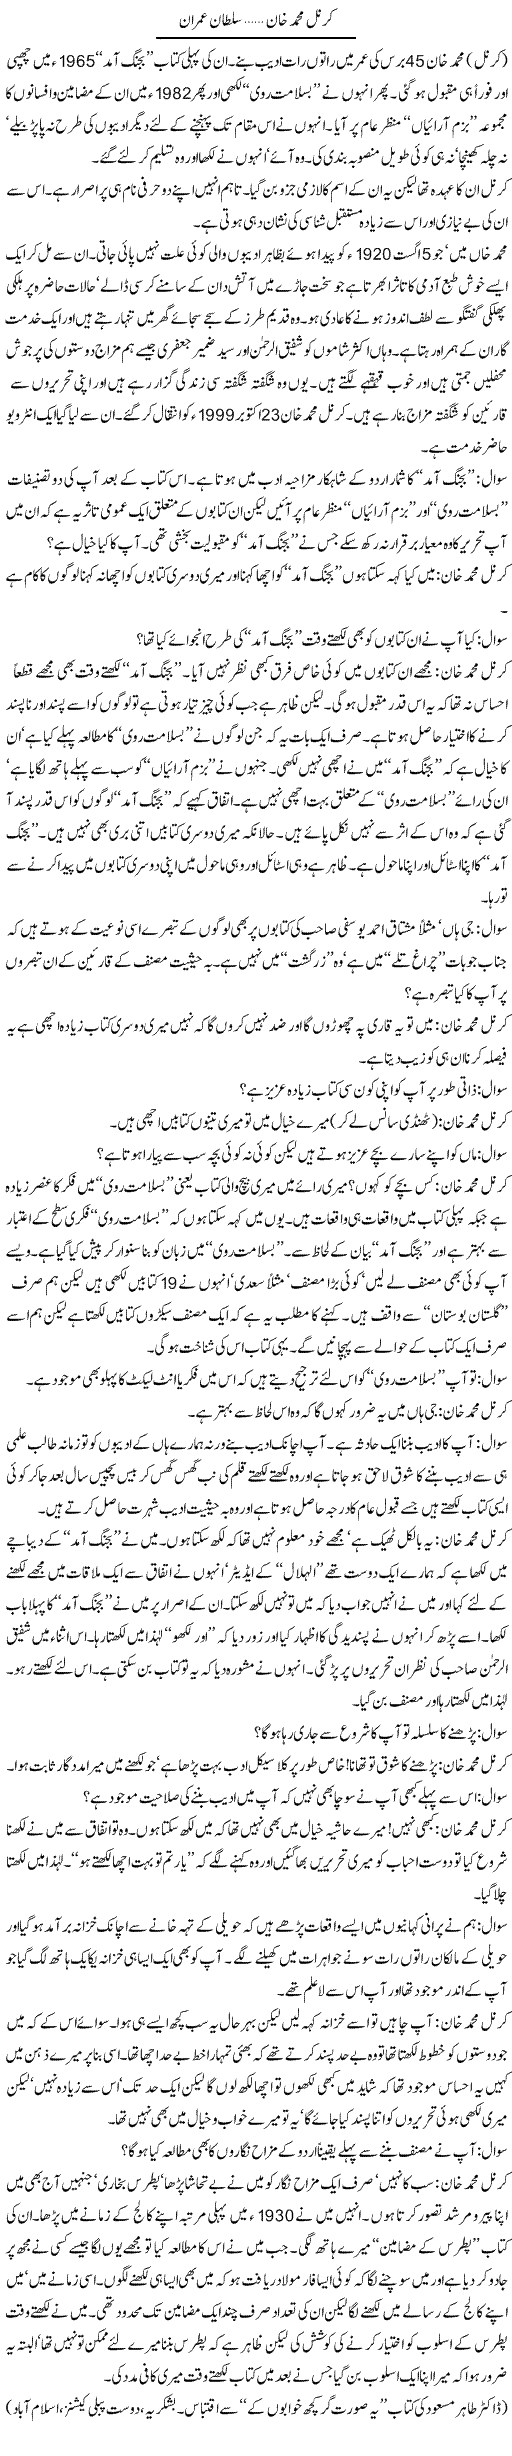 Karnal Muhammad Khan | Sultan Imran | Daily Urdu Columns